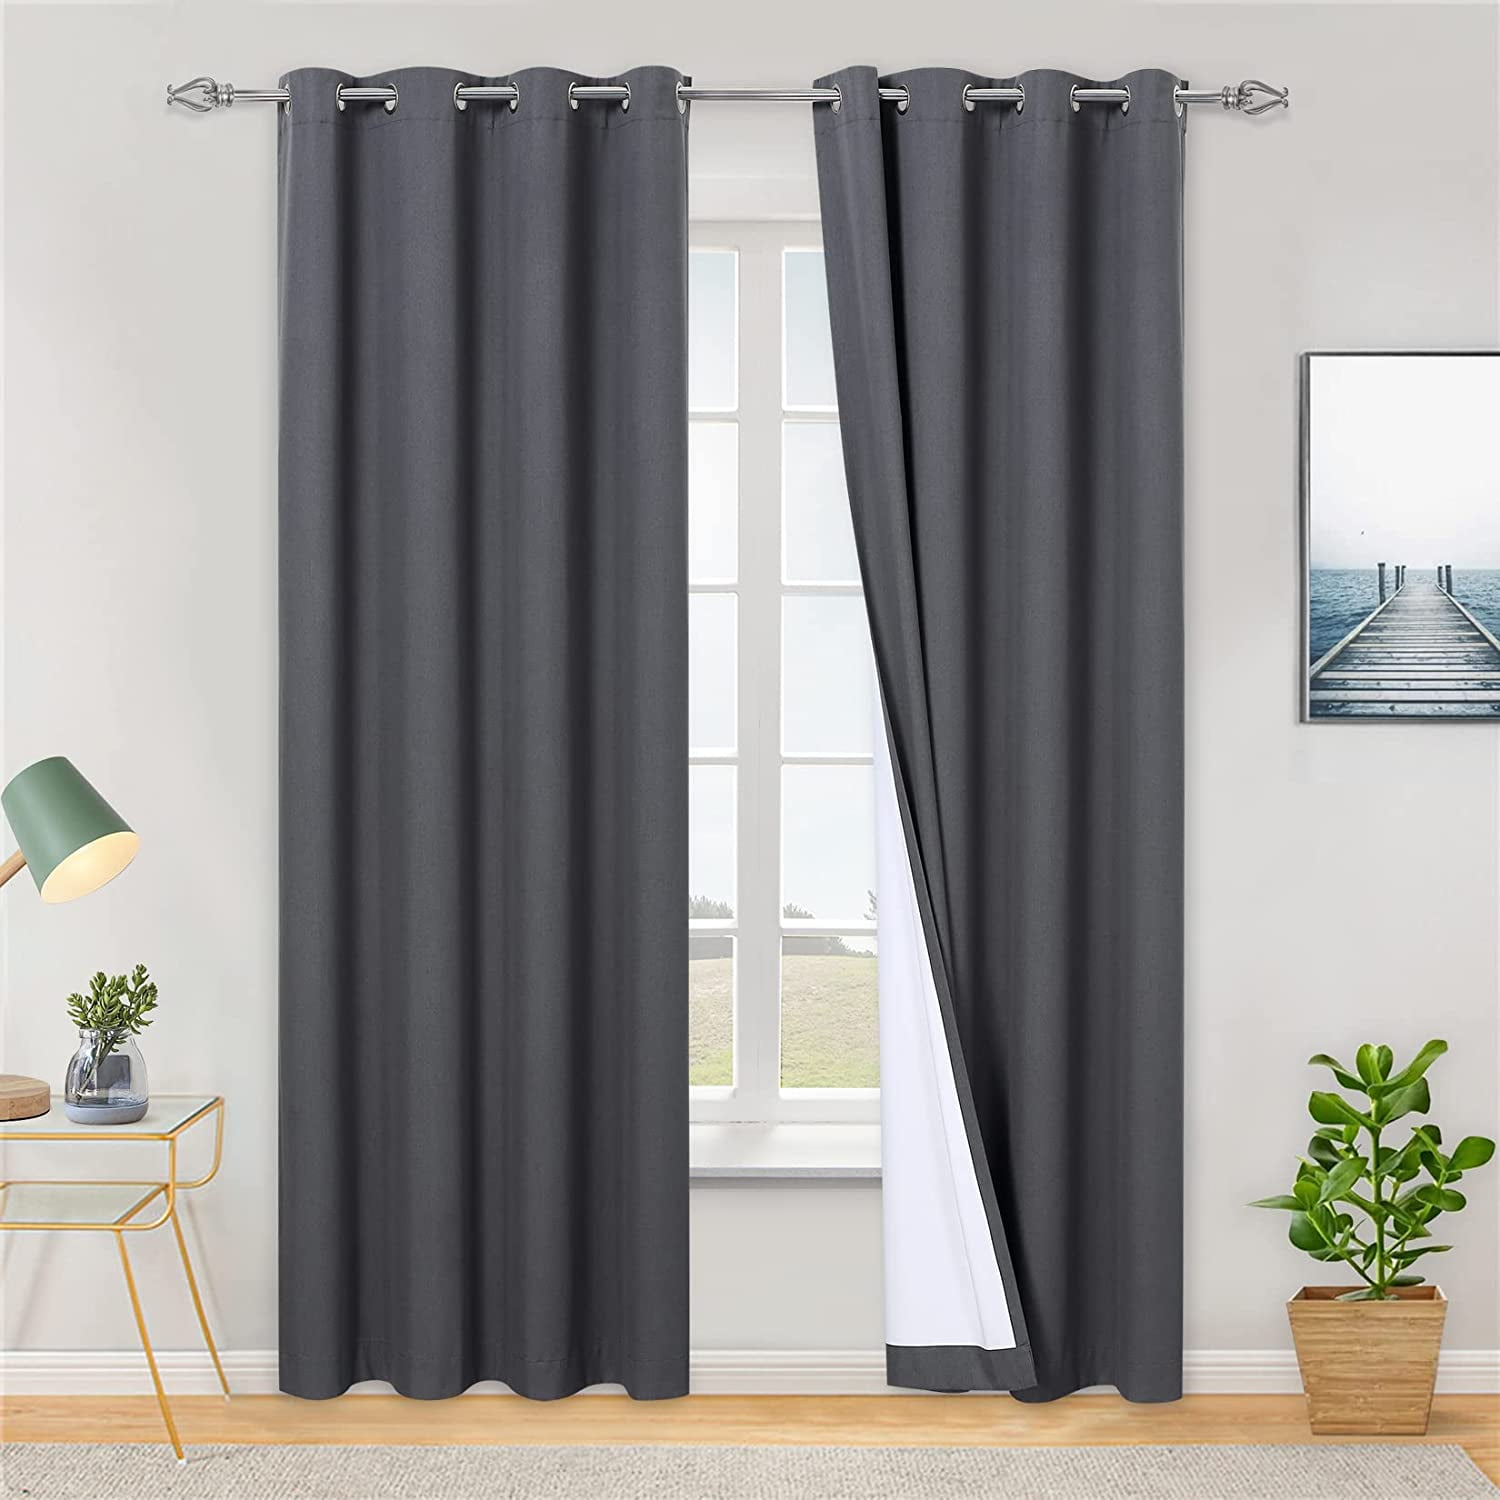 Cortina blackout de terciopelo suave extra ancha para divisor de  habitación, cortinas con aislamiento térmico para dormitorio, cortina de  tratamiento